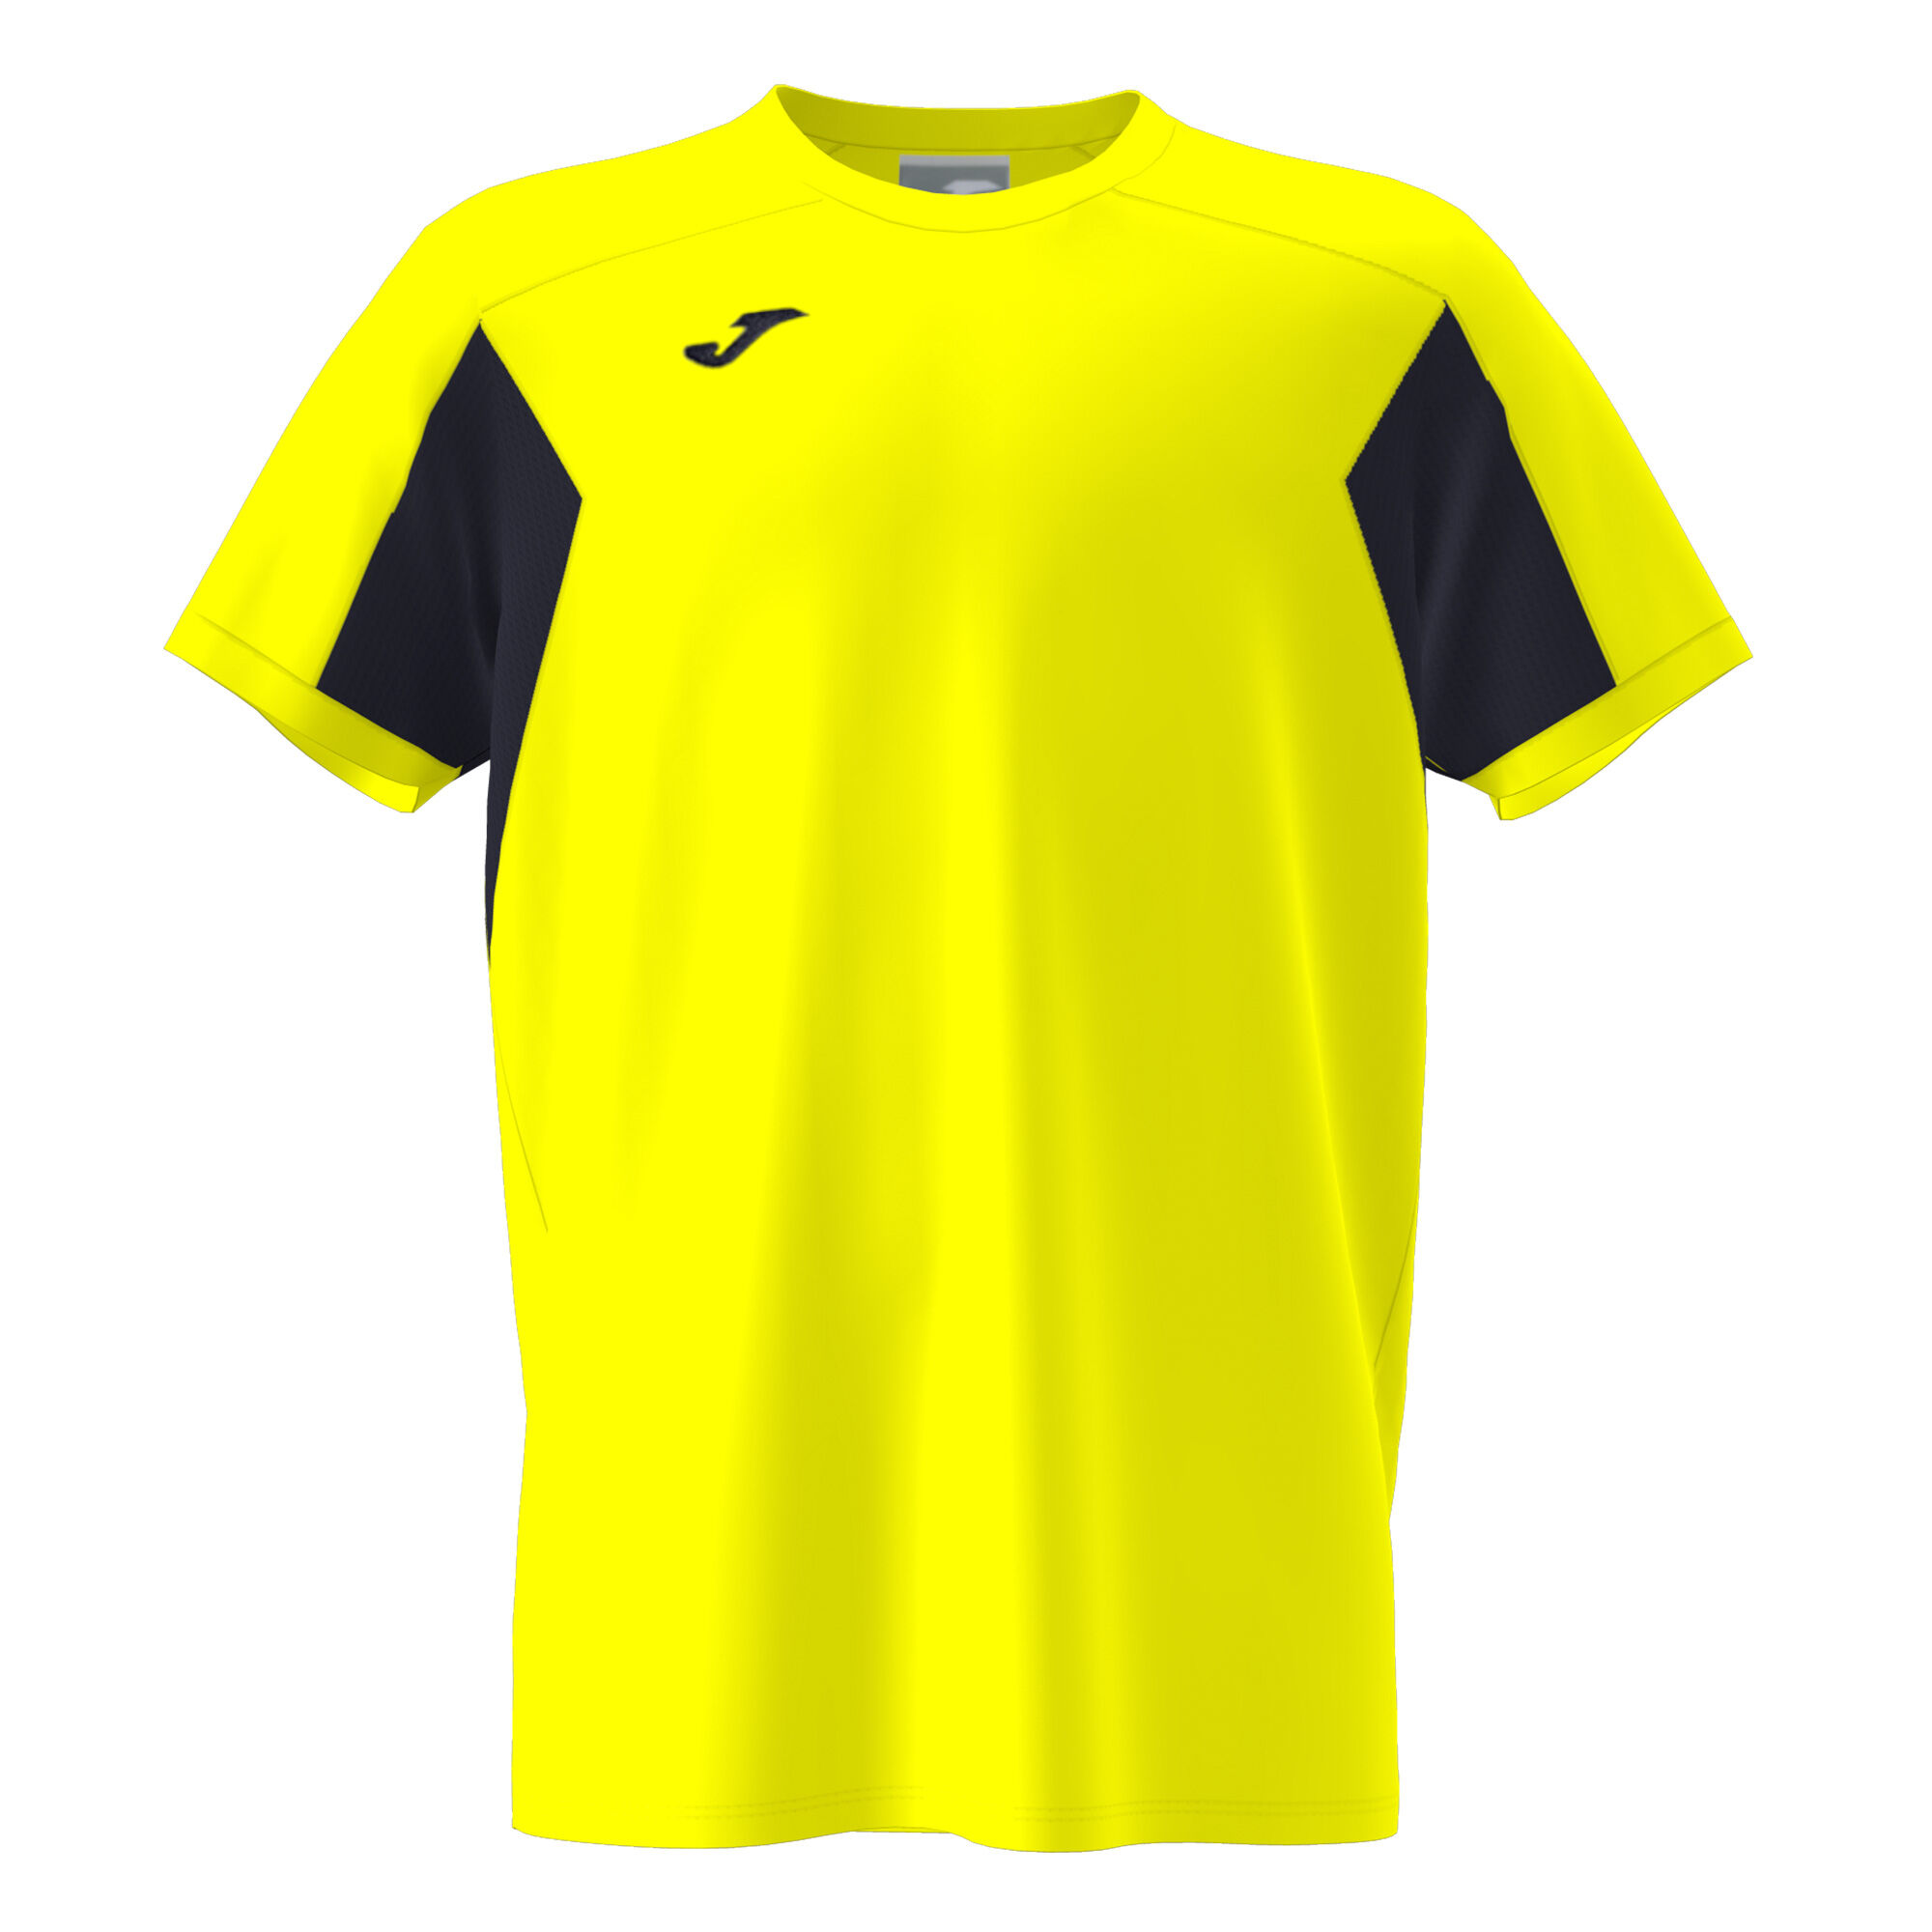 Shirt short sleeve man Colle fluorescent yellow black